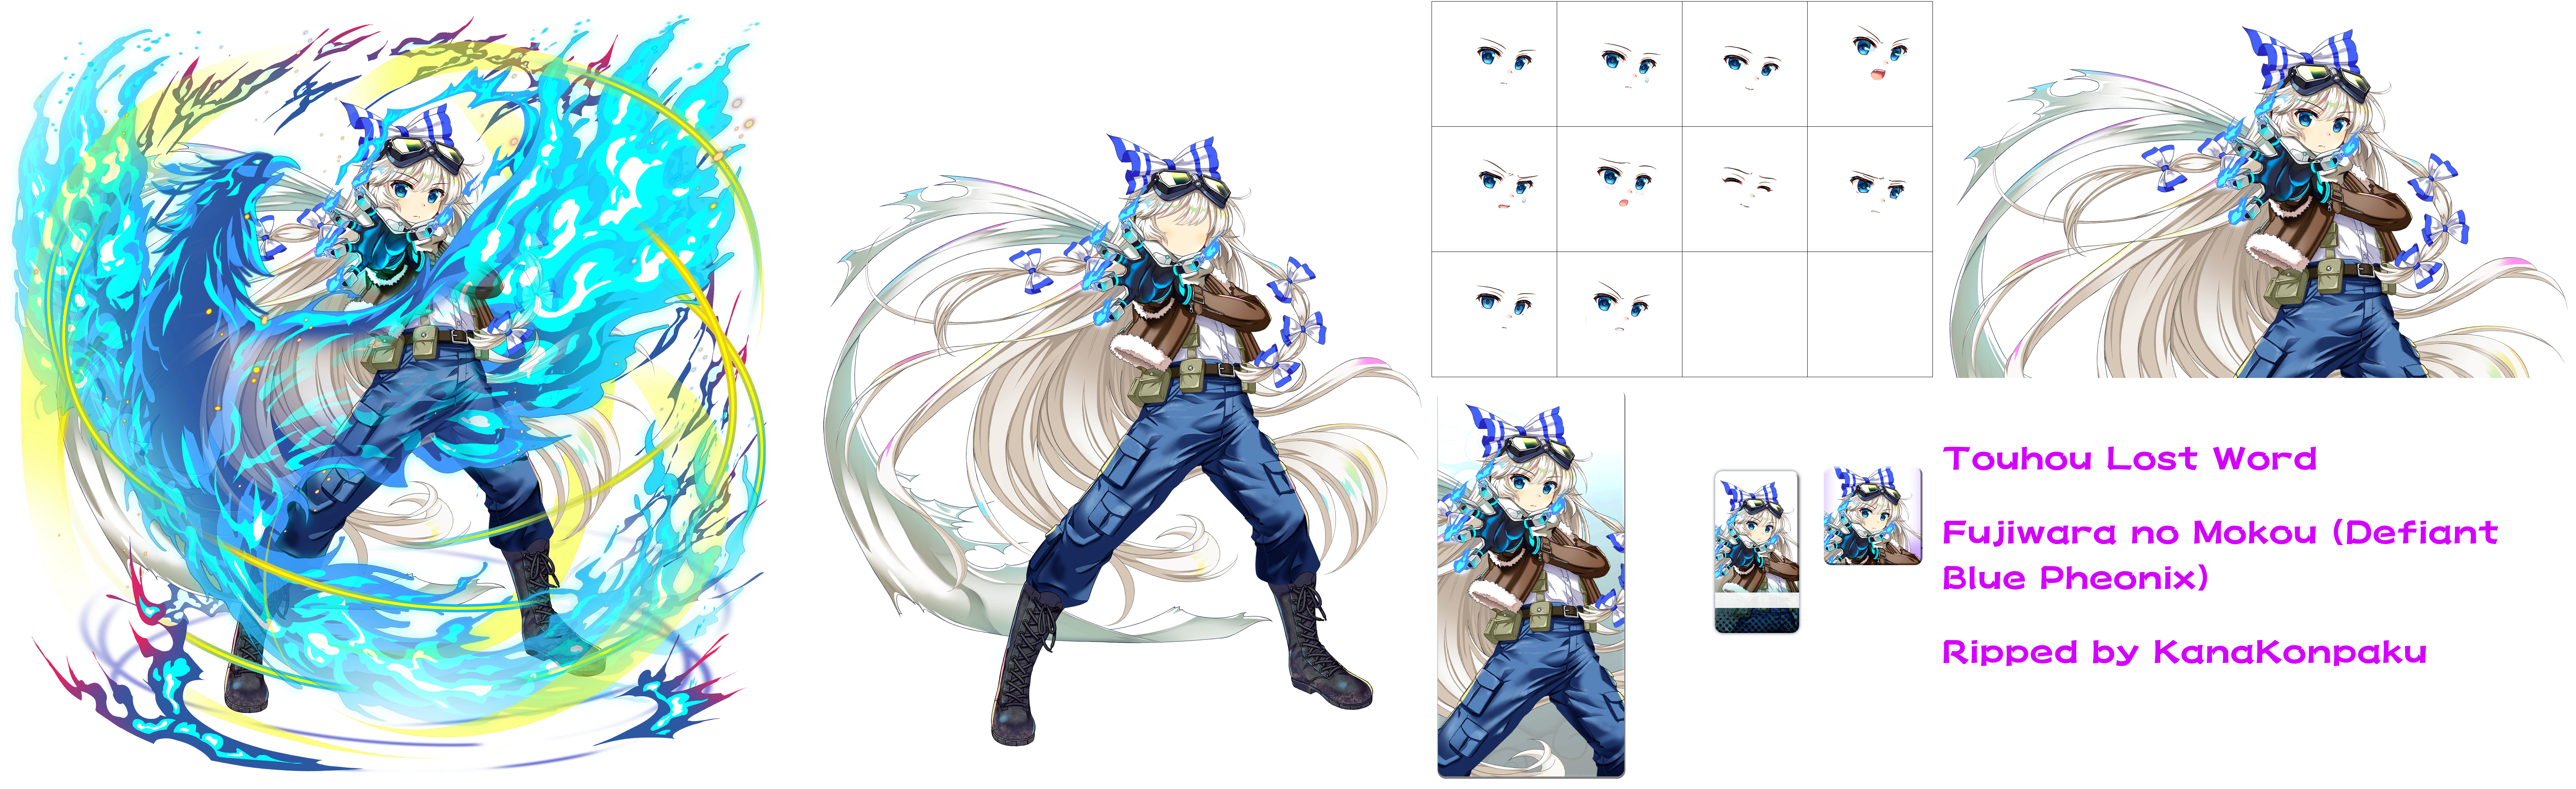 Fujiwara no Mokou (Defiant Blue Phoenix)